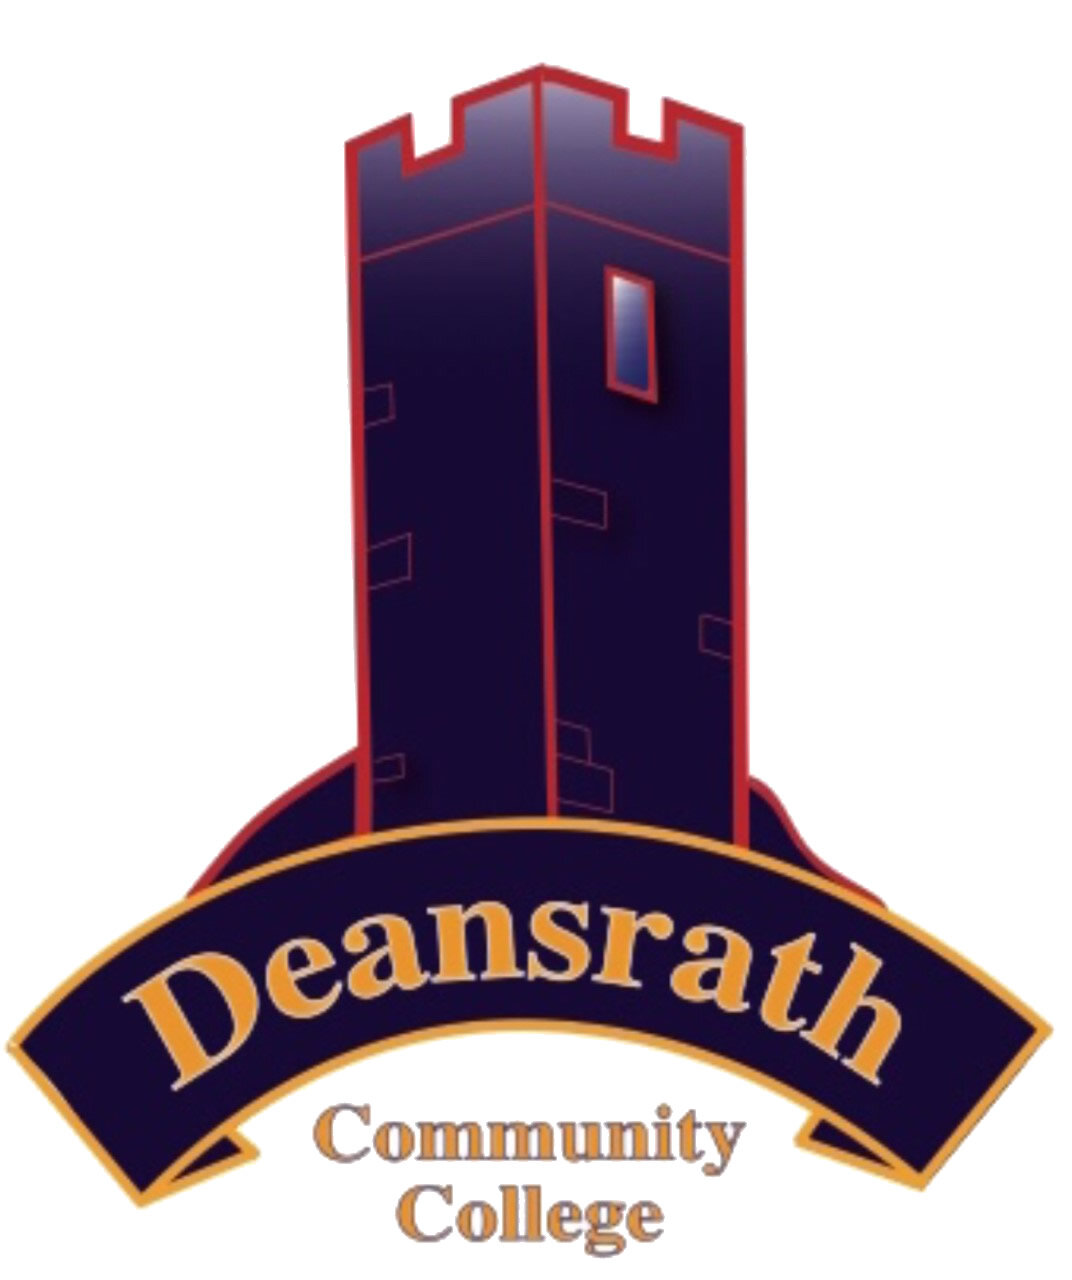 Deansrath Community College